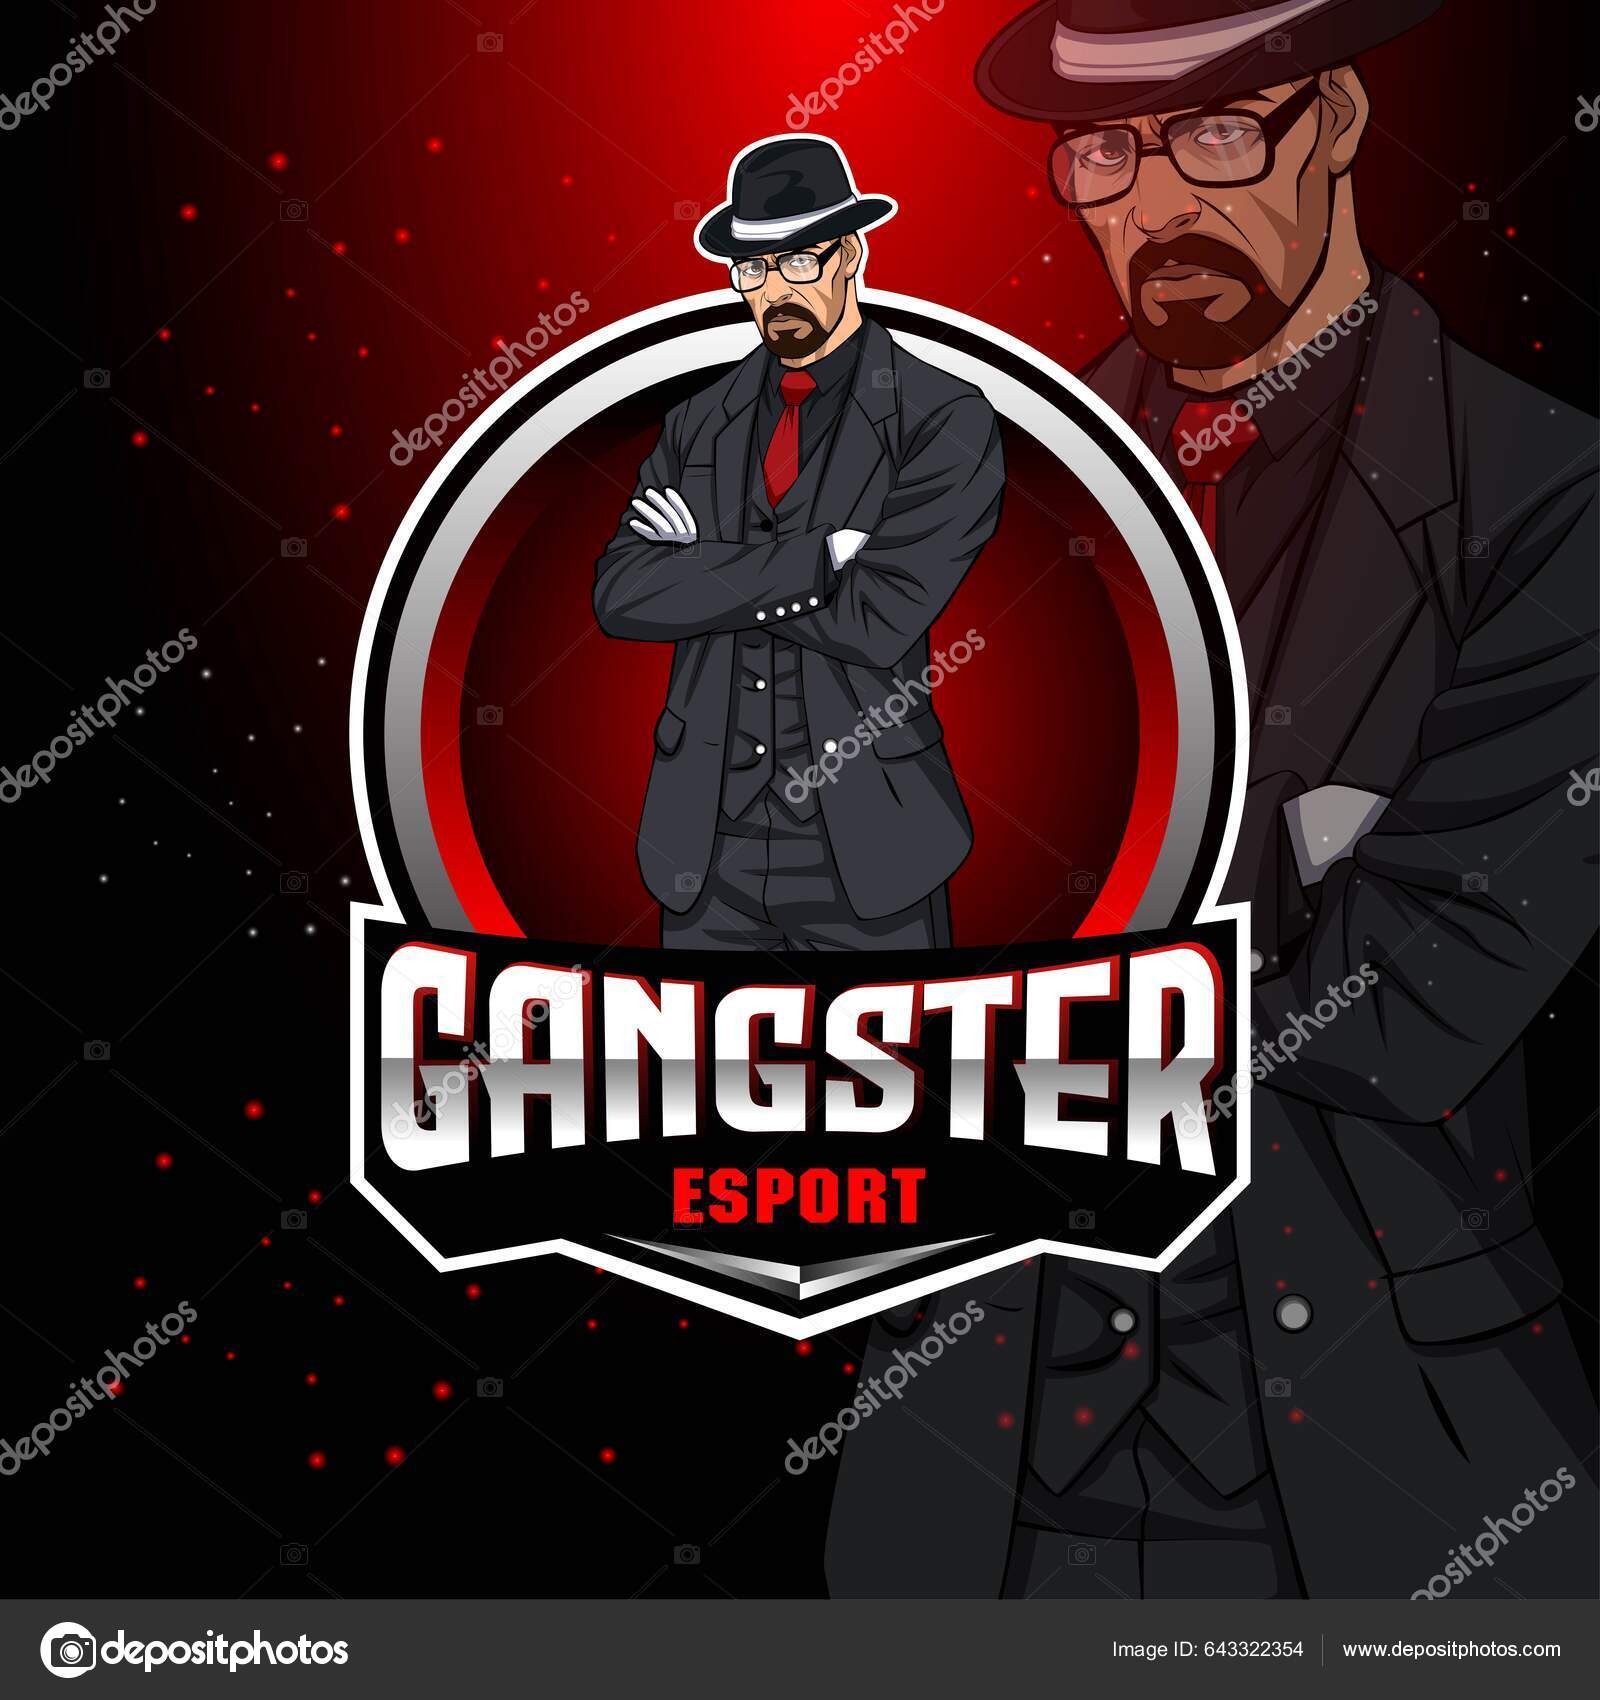 https://st5.depositphotos.com/70453962/64332/v/1600/depositphotos_643322354-stock-illustration-gangster-gaming-mascot-logo.jpg